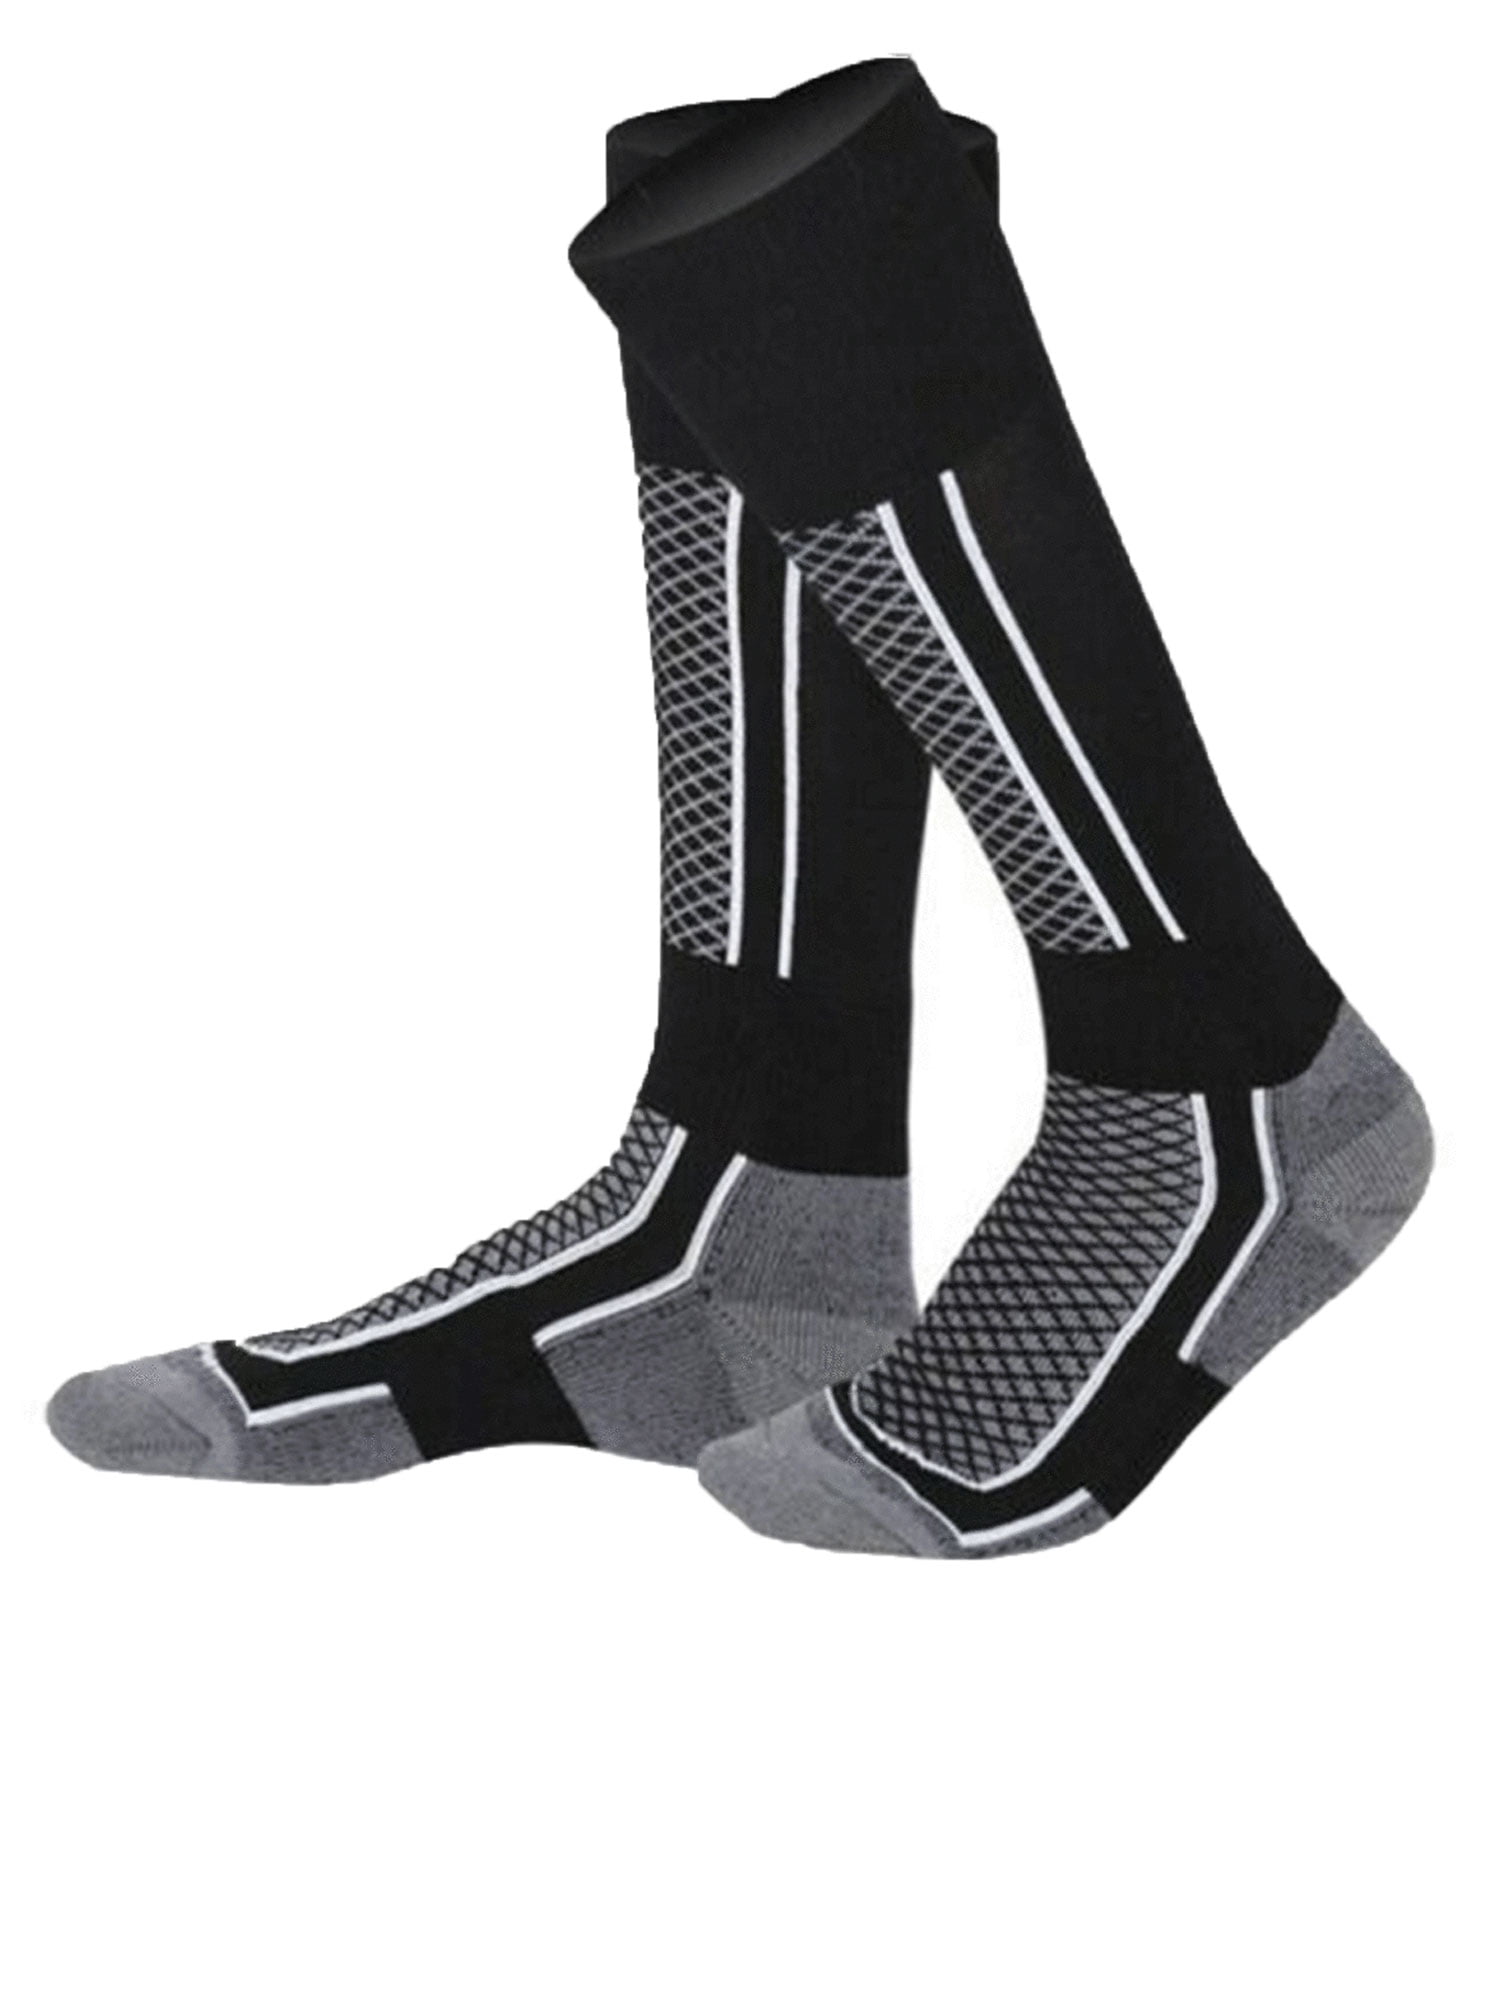 Fashion Men Women Winter Warm Long Ski Socks Hiking Sports Thermal Boot Sock